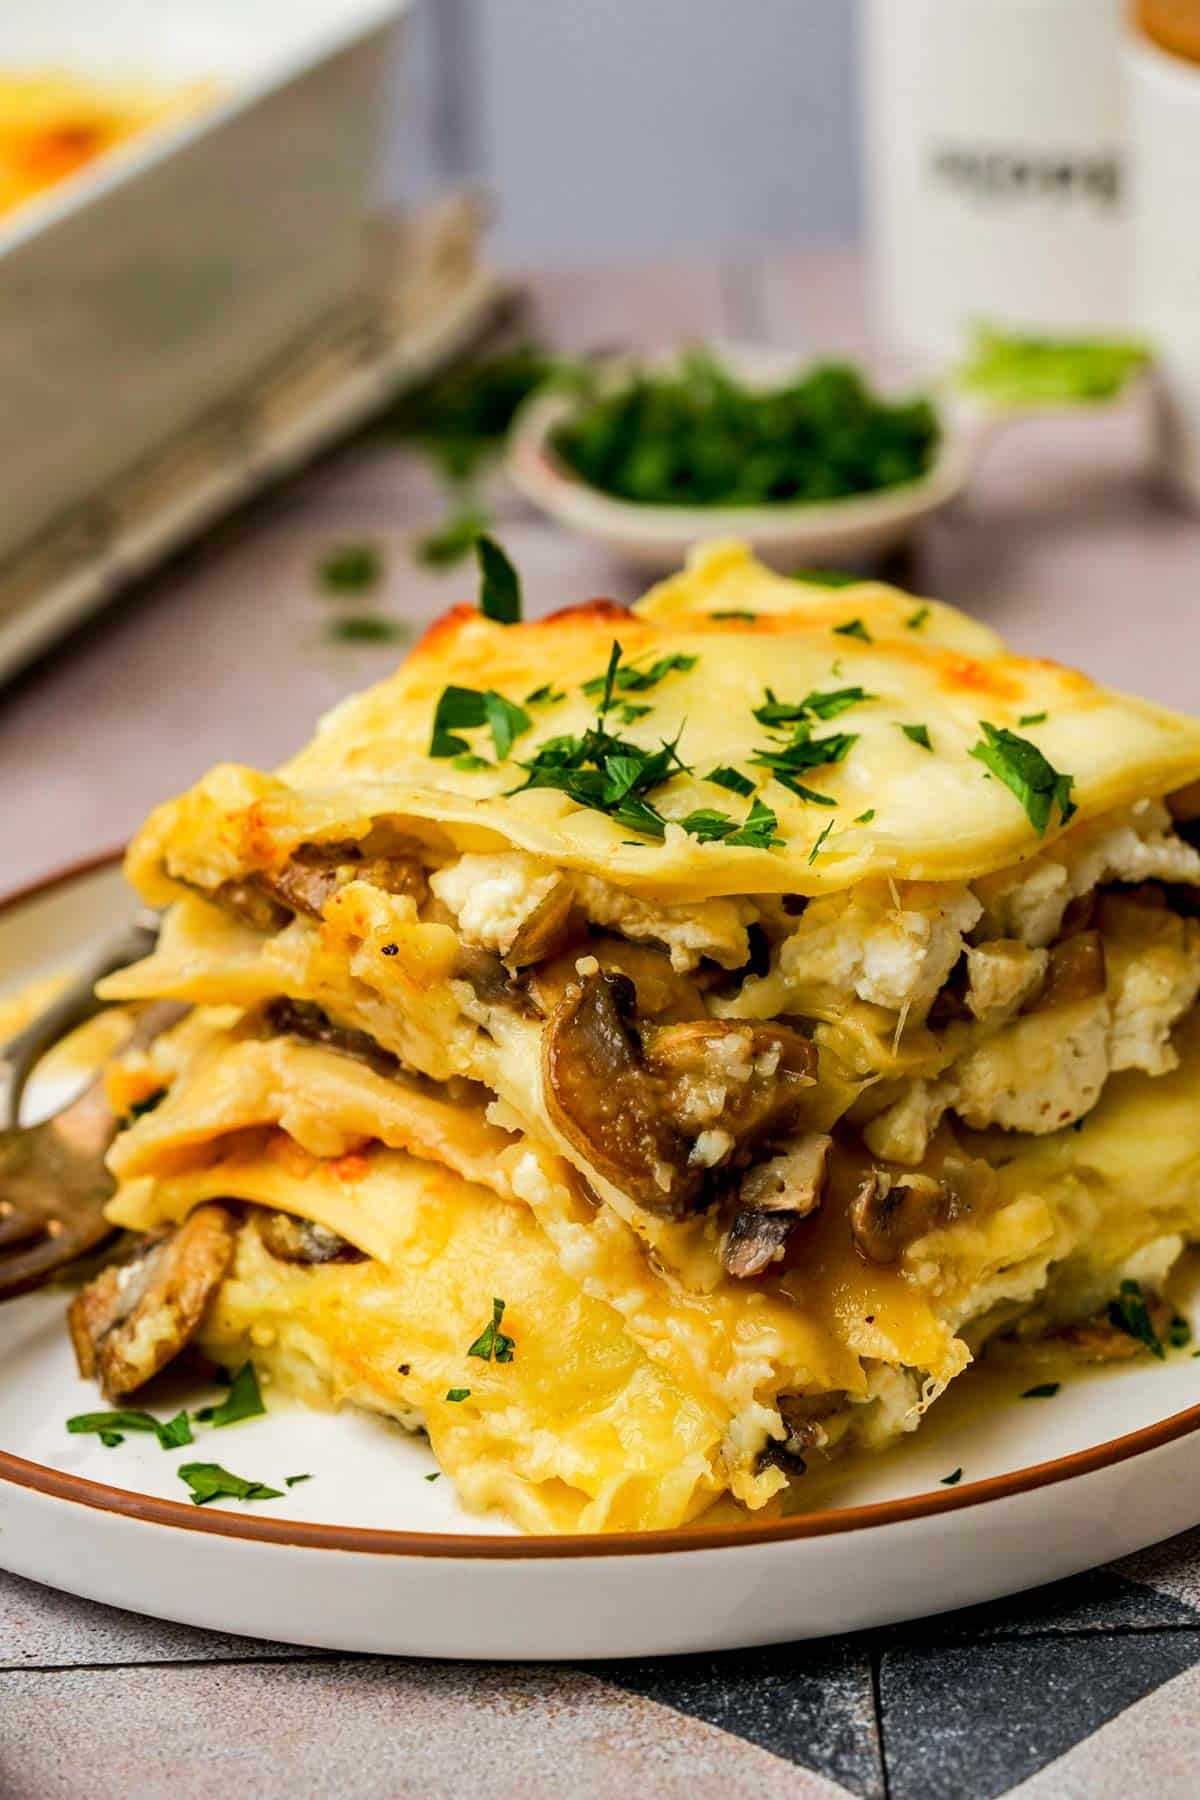 sliced mushroom lasagna on a plate garnished with herbs.